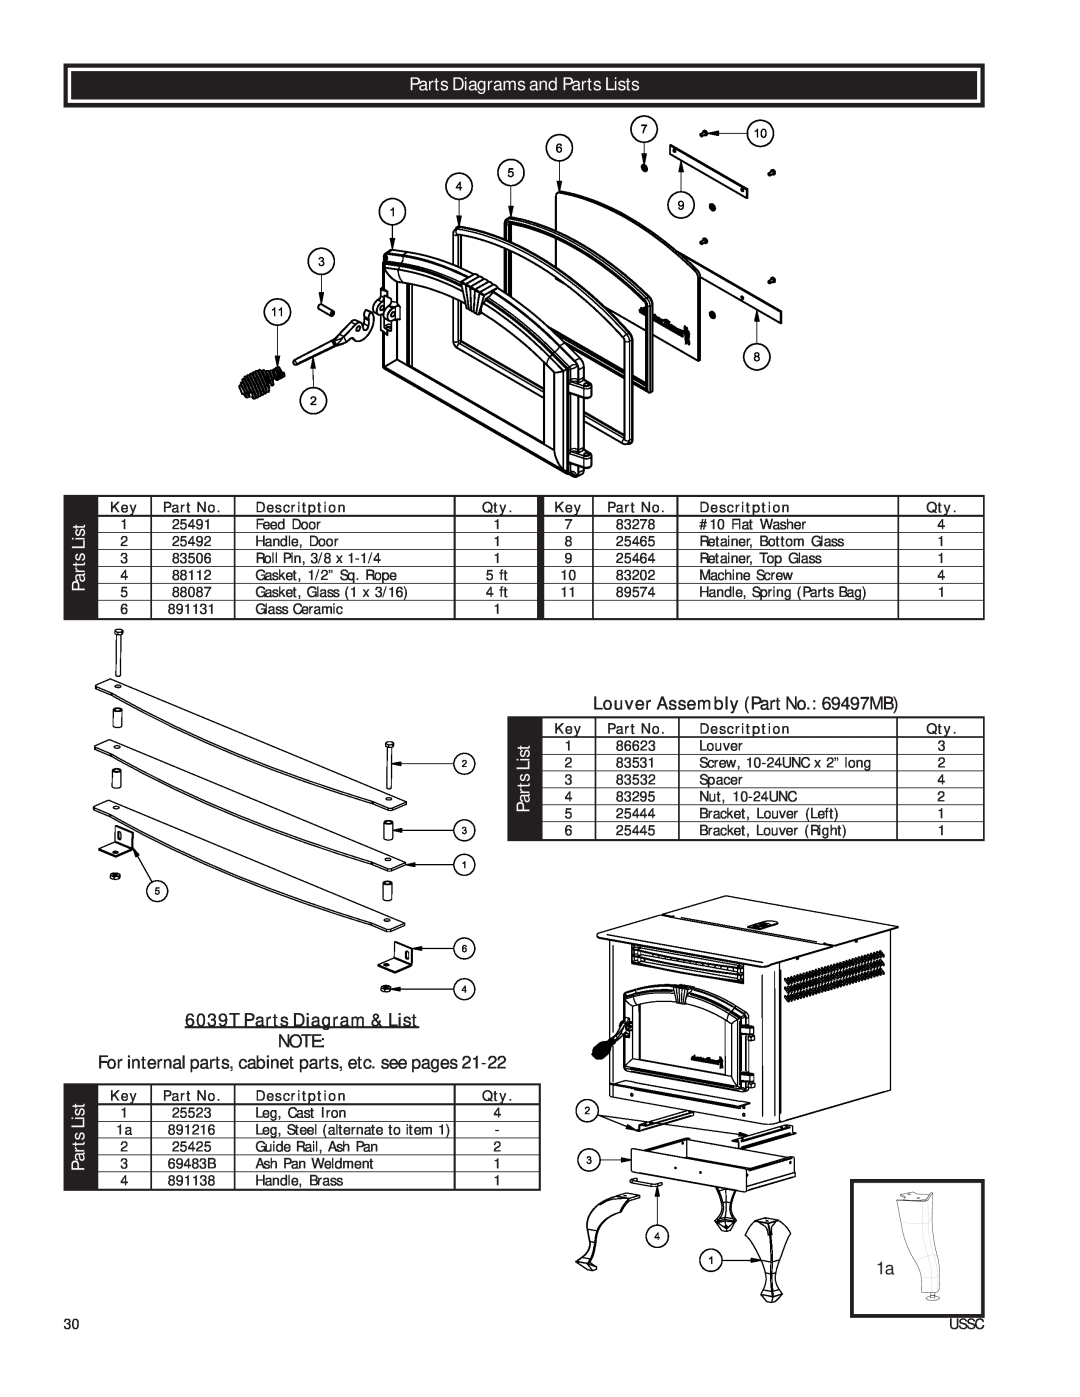 United States Stove 6039I owner manual Parts Diagrams and Parts Lists, 6039T Parts Diagram & List, Descritption 